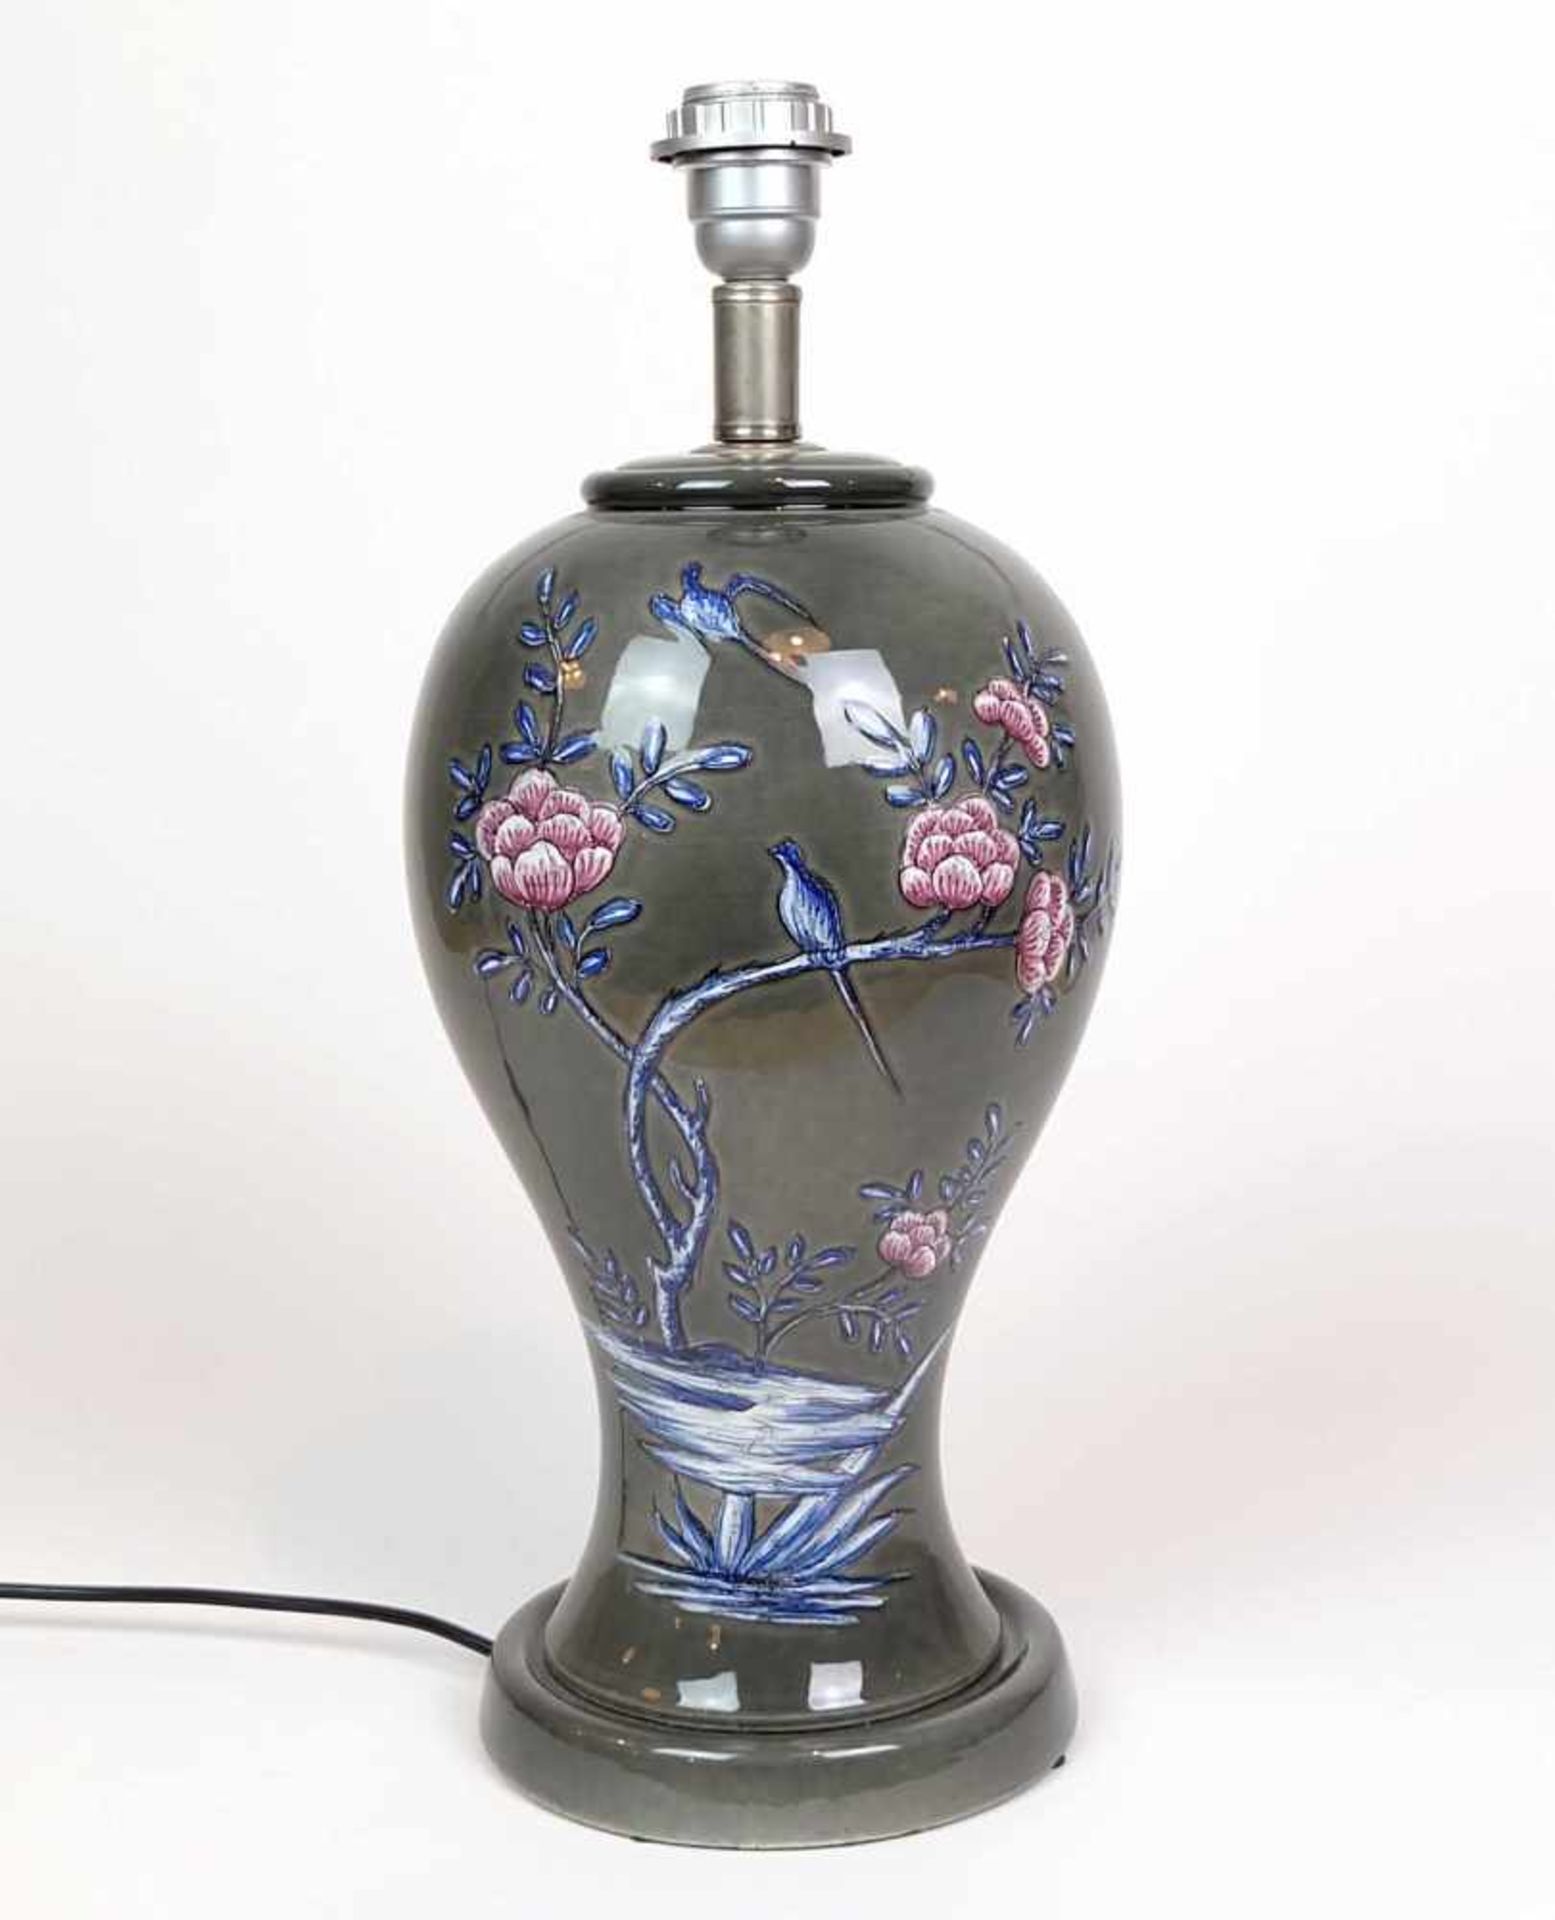 LAMPENFUß, Manufaktur Ghinza, Keramik, Balusterform auf ausgestelltem Sockel, graue Fondglasur, in